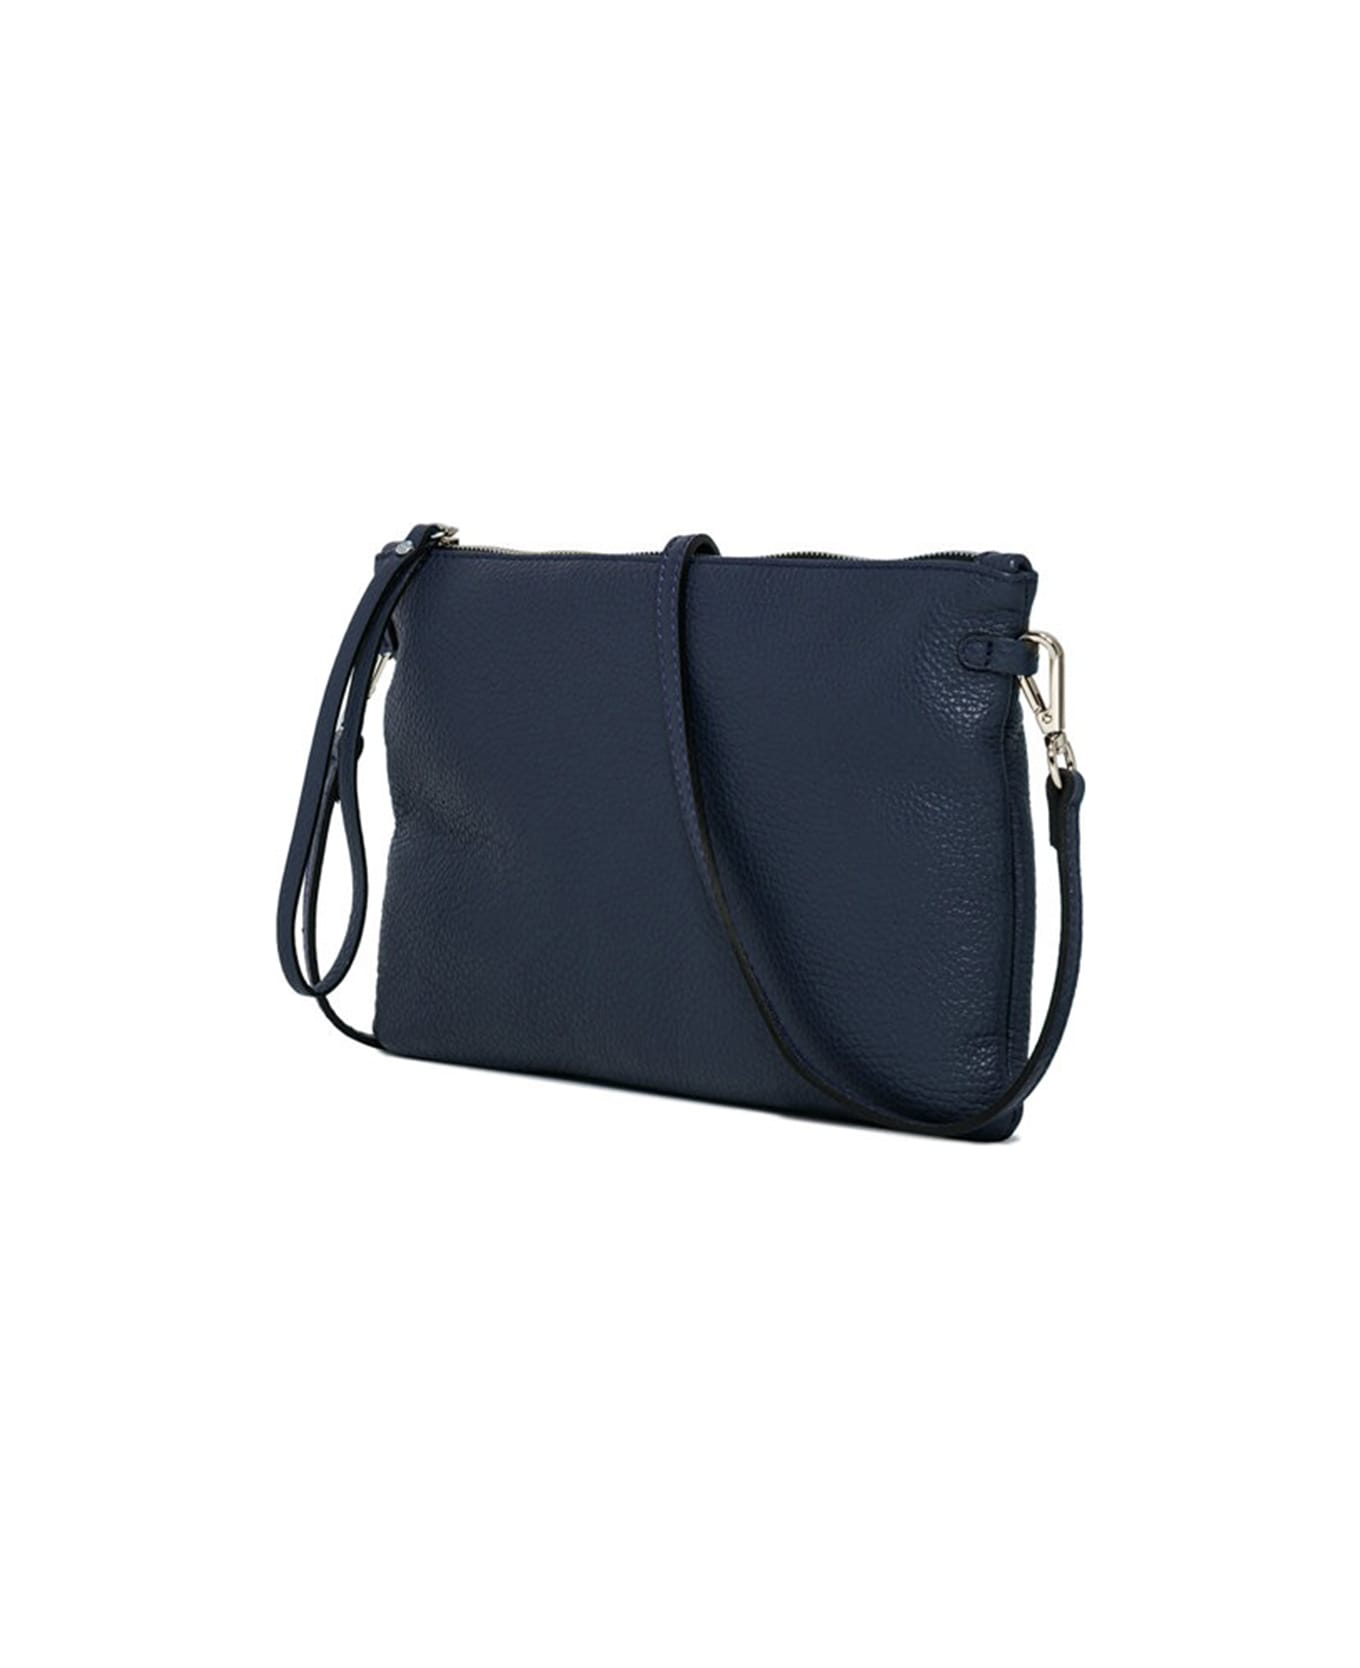 Gianni Chiarini Hermy Navy Blue Leather Clutch Bag - NAVY